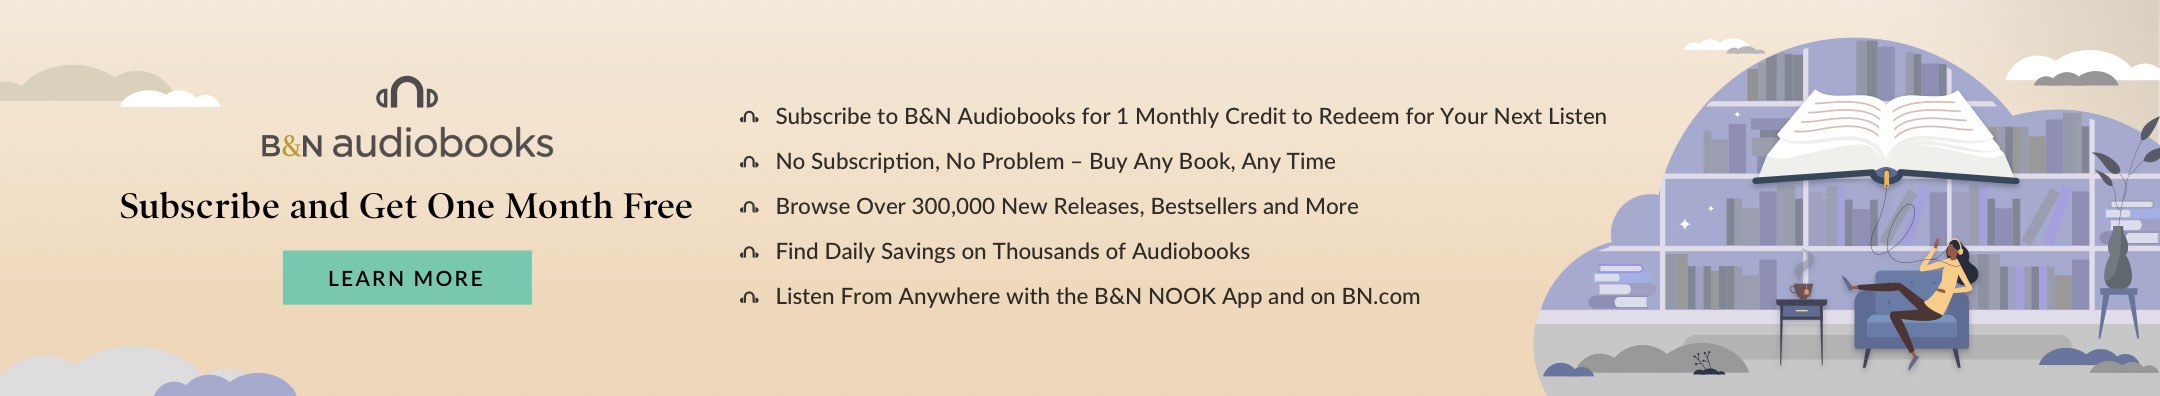 B&N Audiobooks